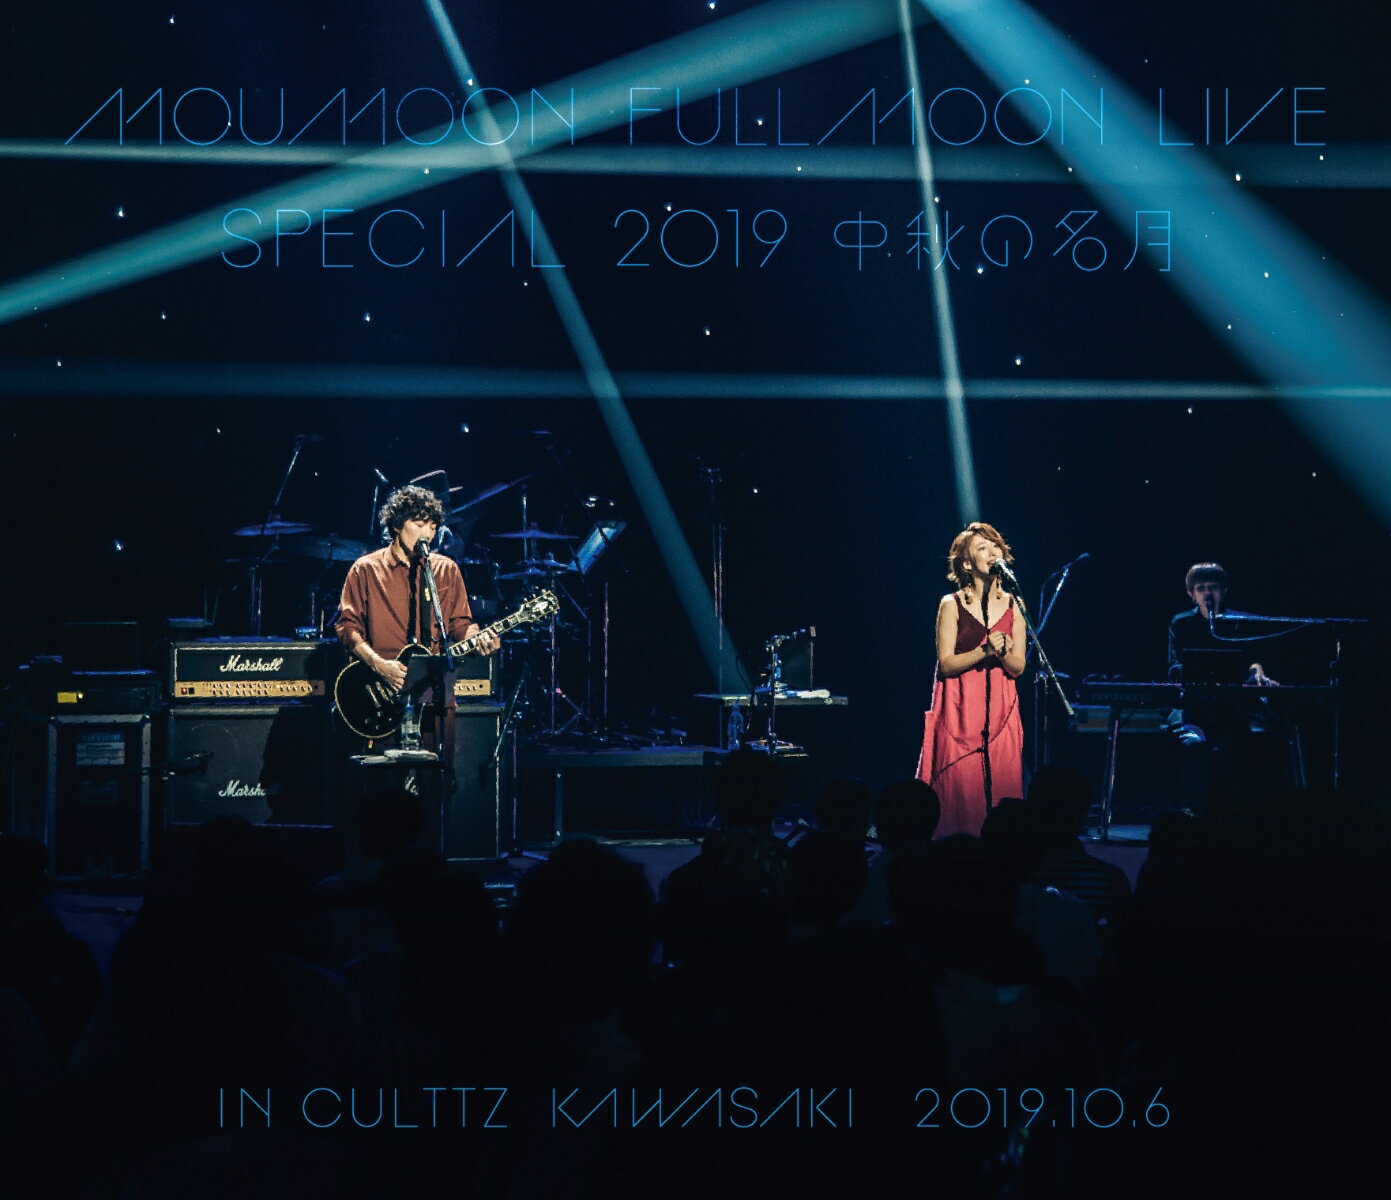 FULLMOON LIVE SPECIAL 2019 〜中秋の名月〜 IN CULTTZ KAWASAKI 2019.10.6【Blu-ray】